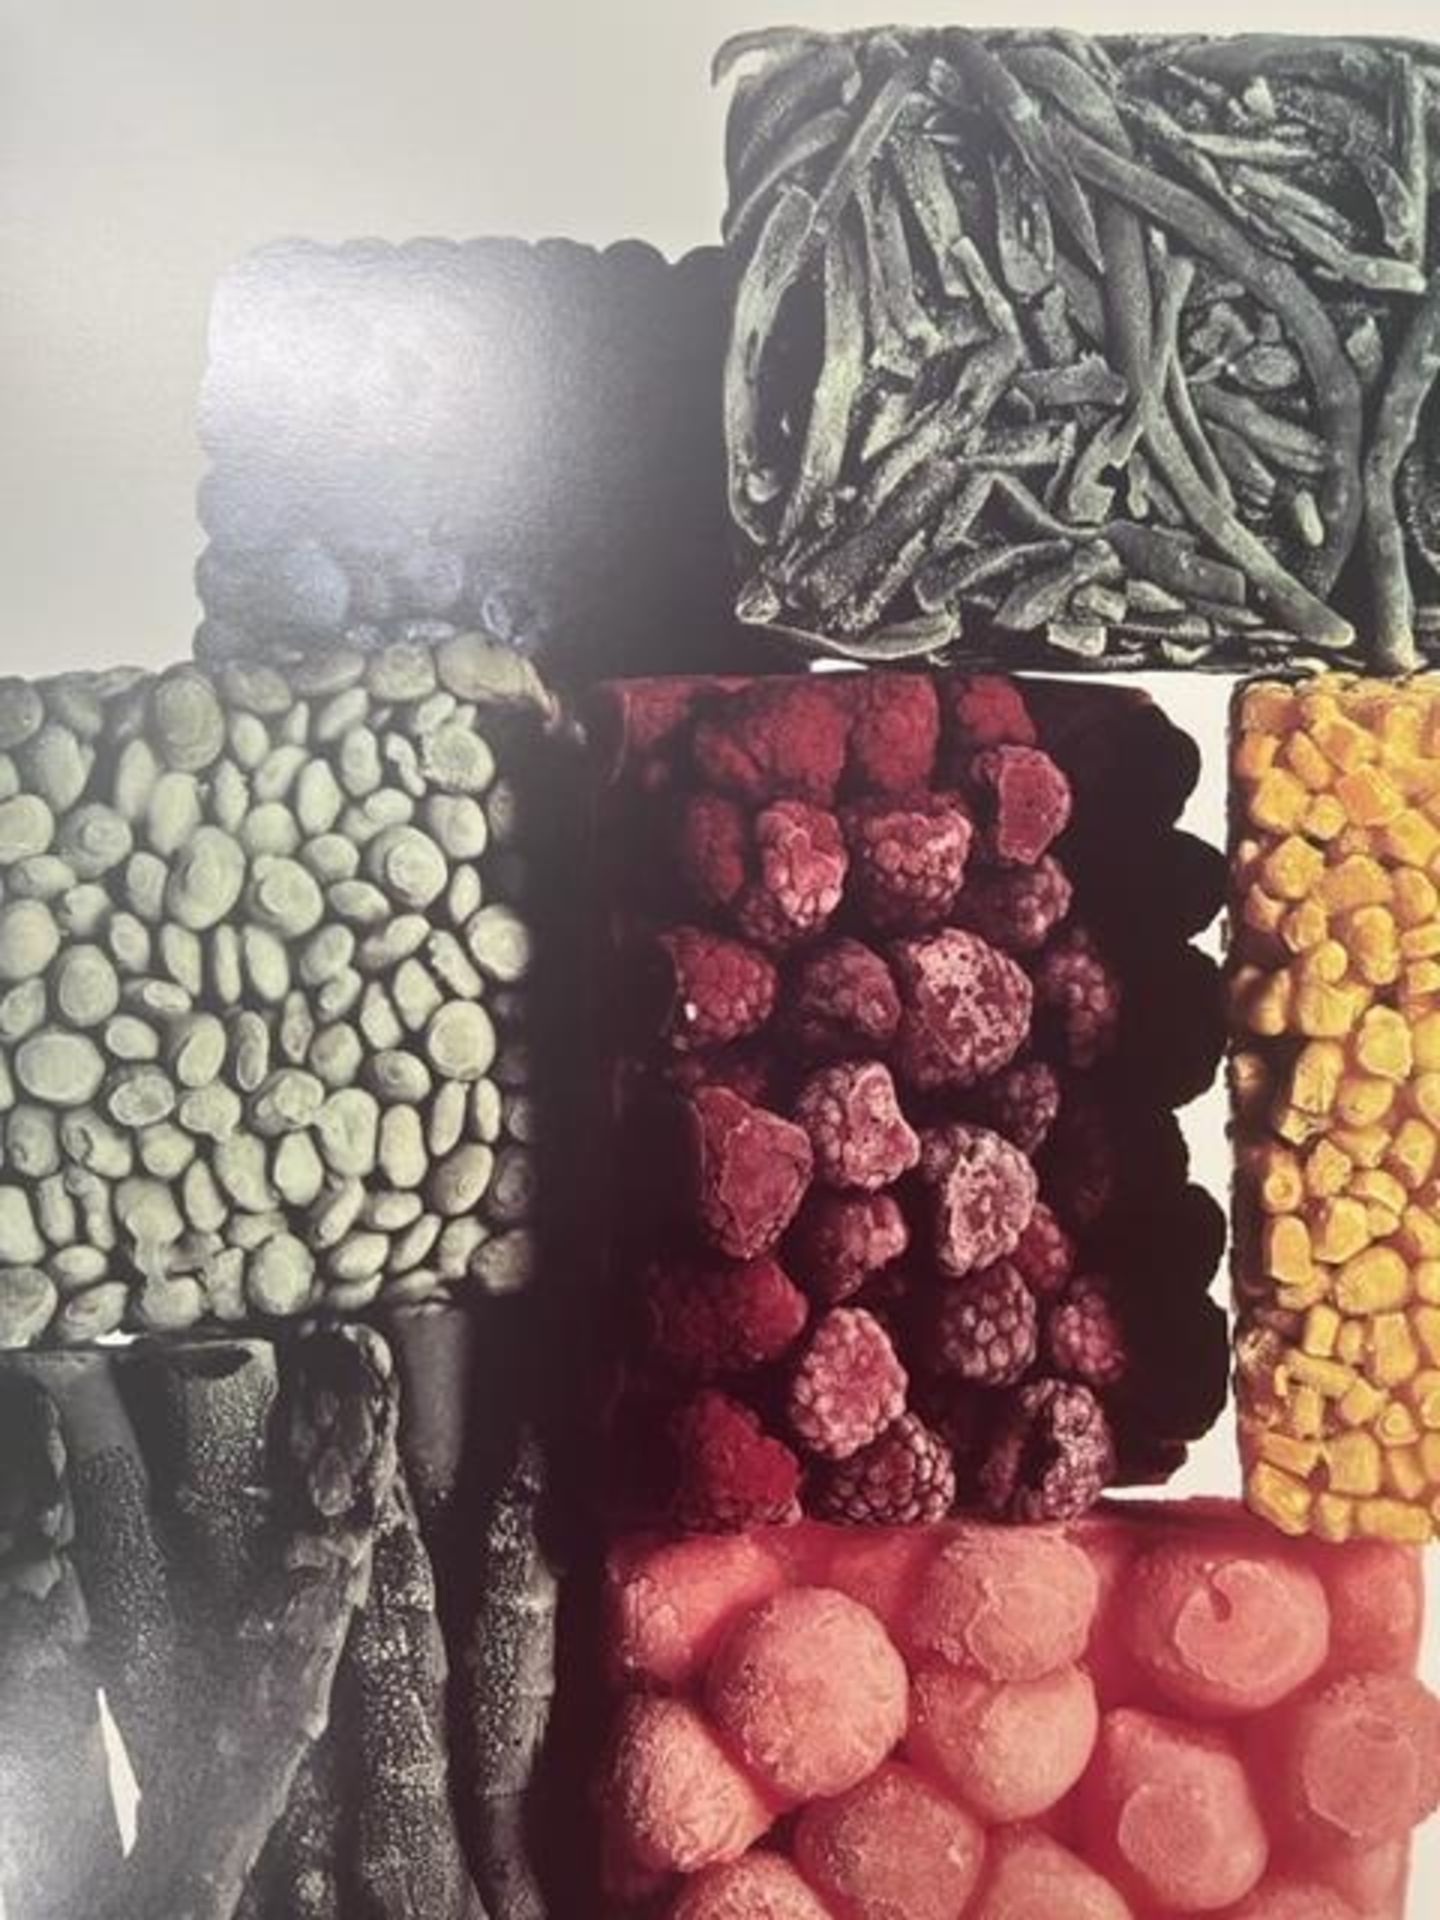 Irving Penn "Frozen Foods" Print. - Image 3 of 6